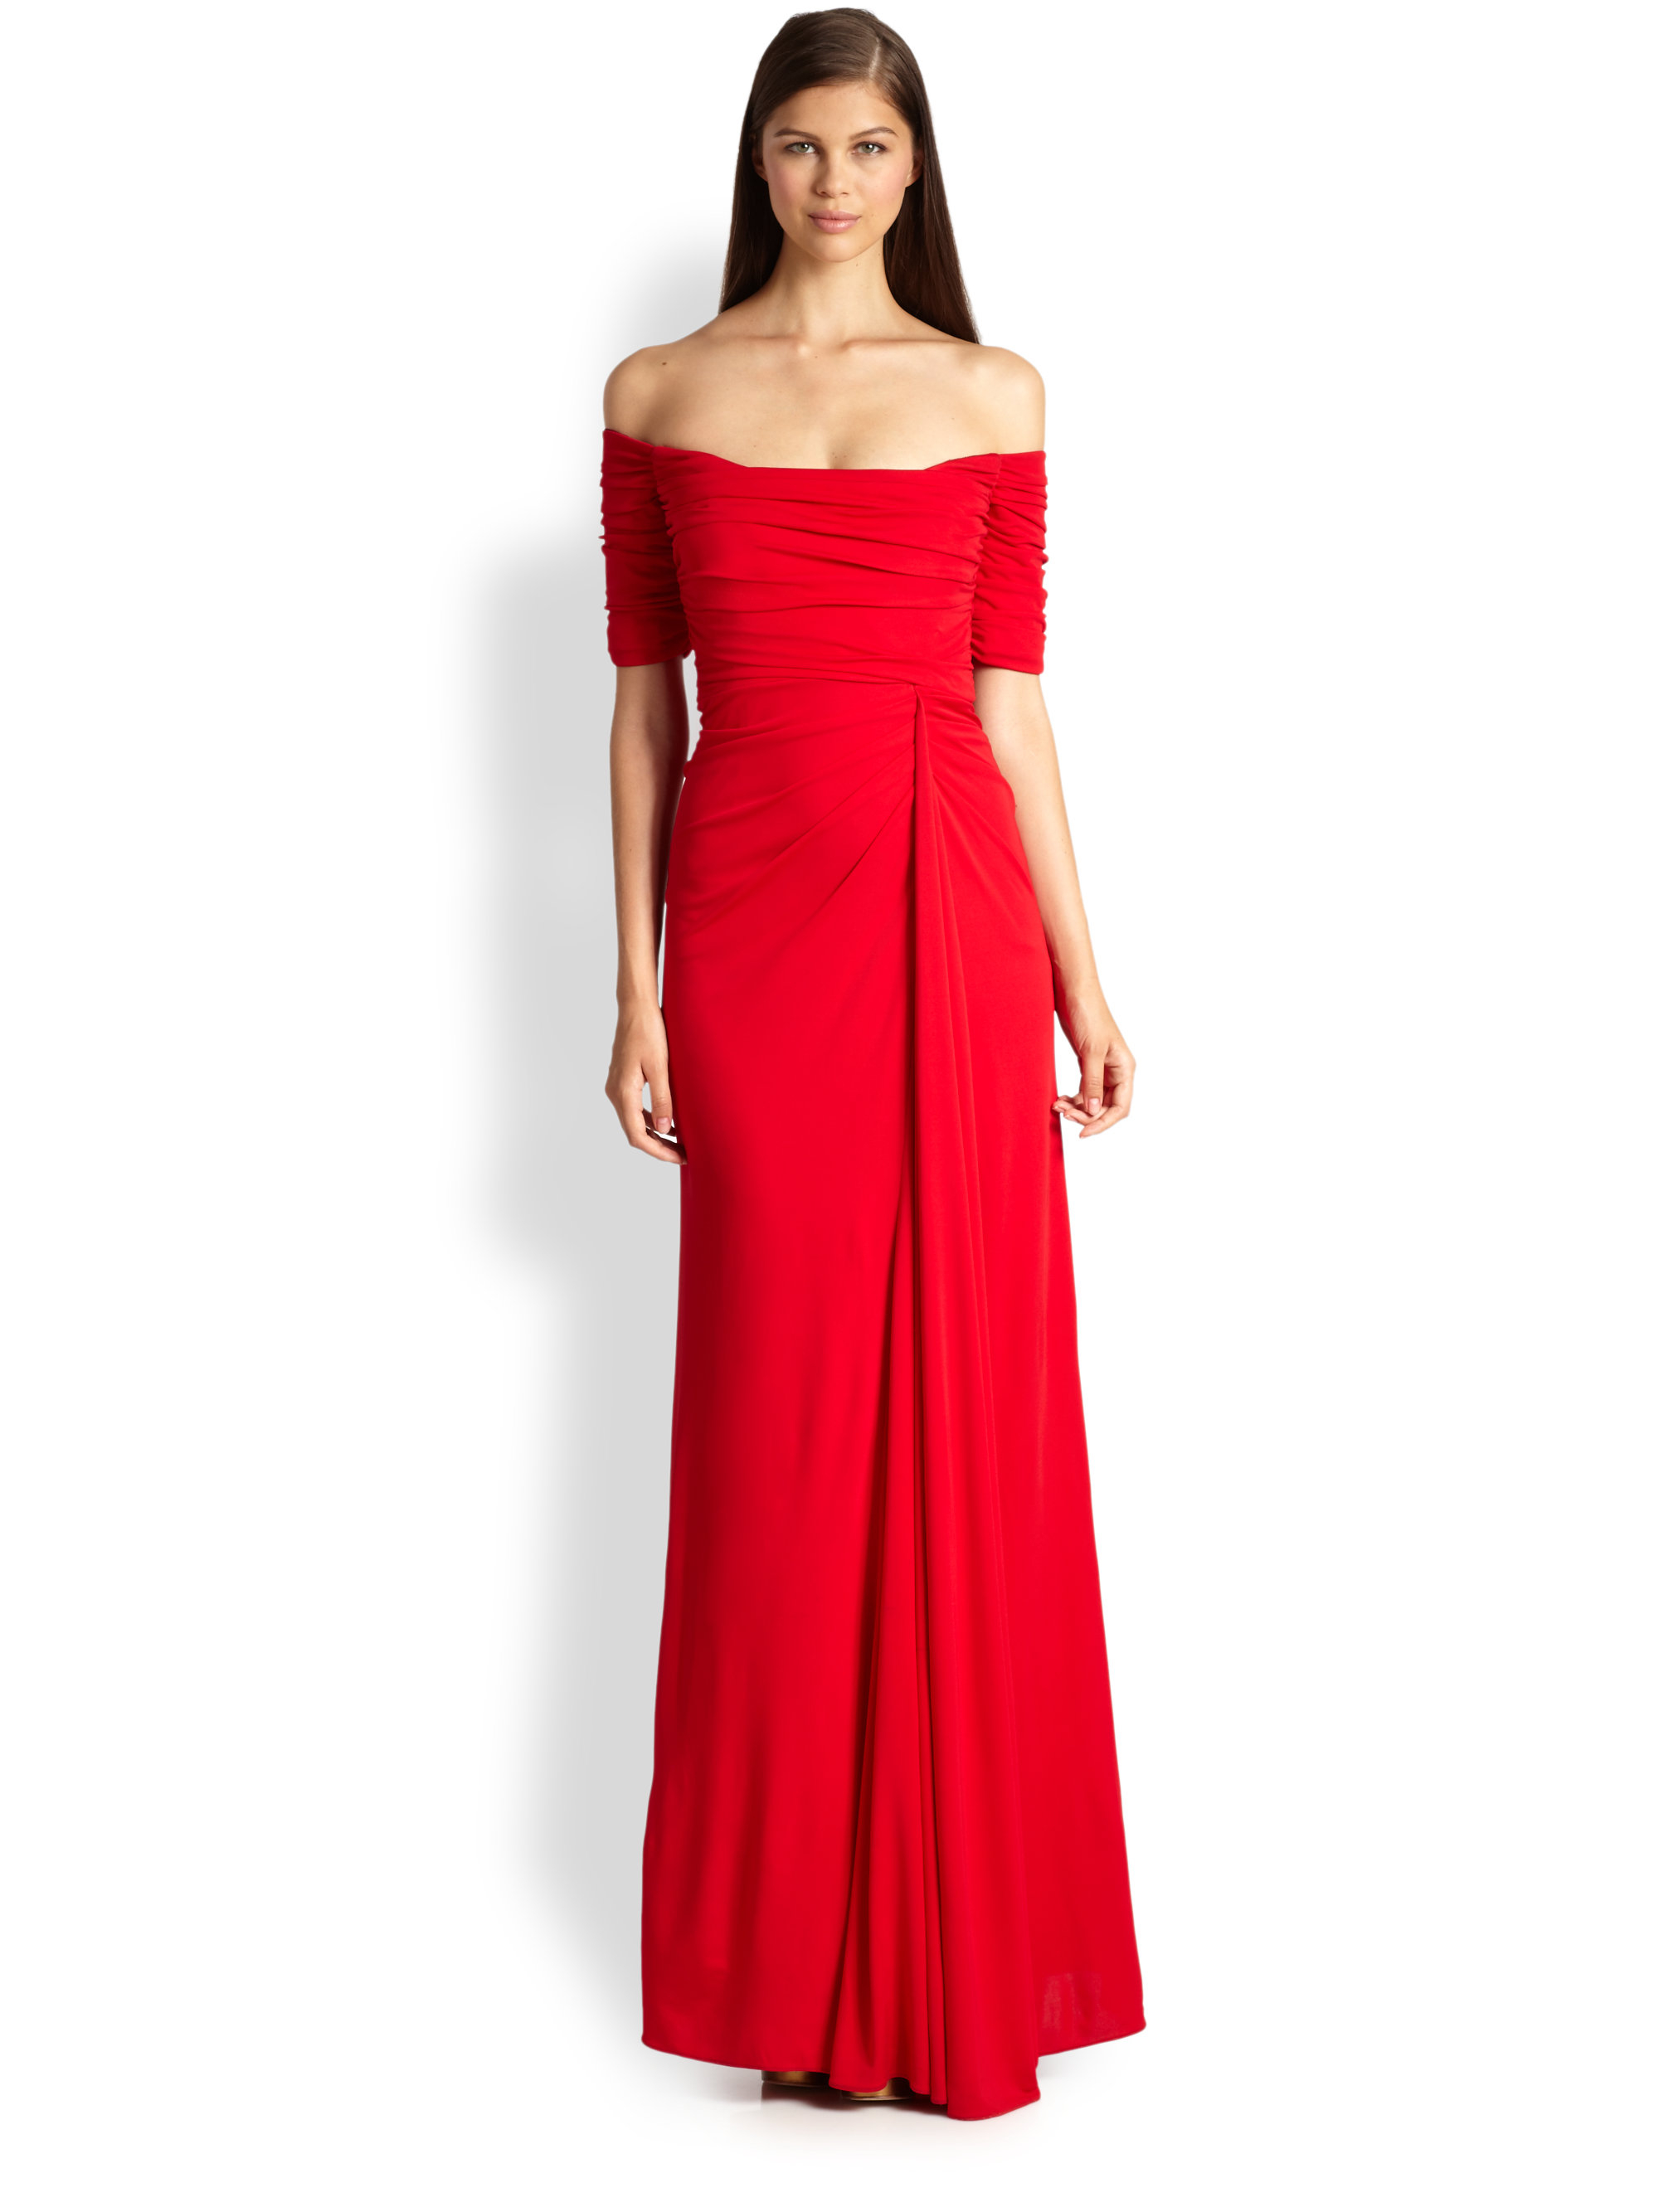 Lyst - Badgley Mischka Off-Shoulder Jersey Gown in Red2000 x 2667